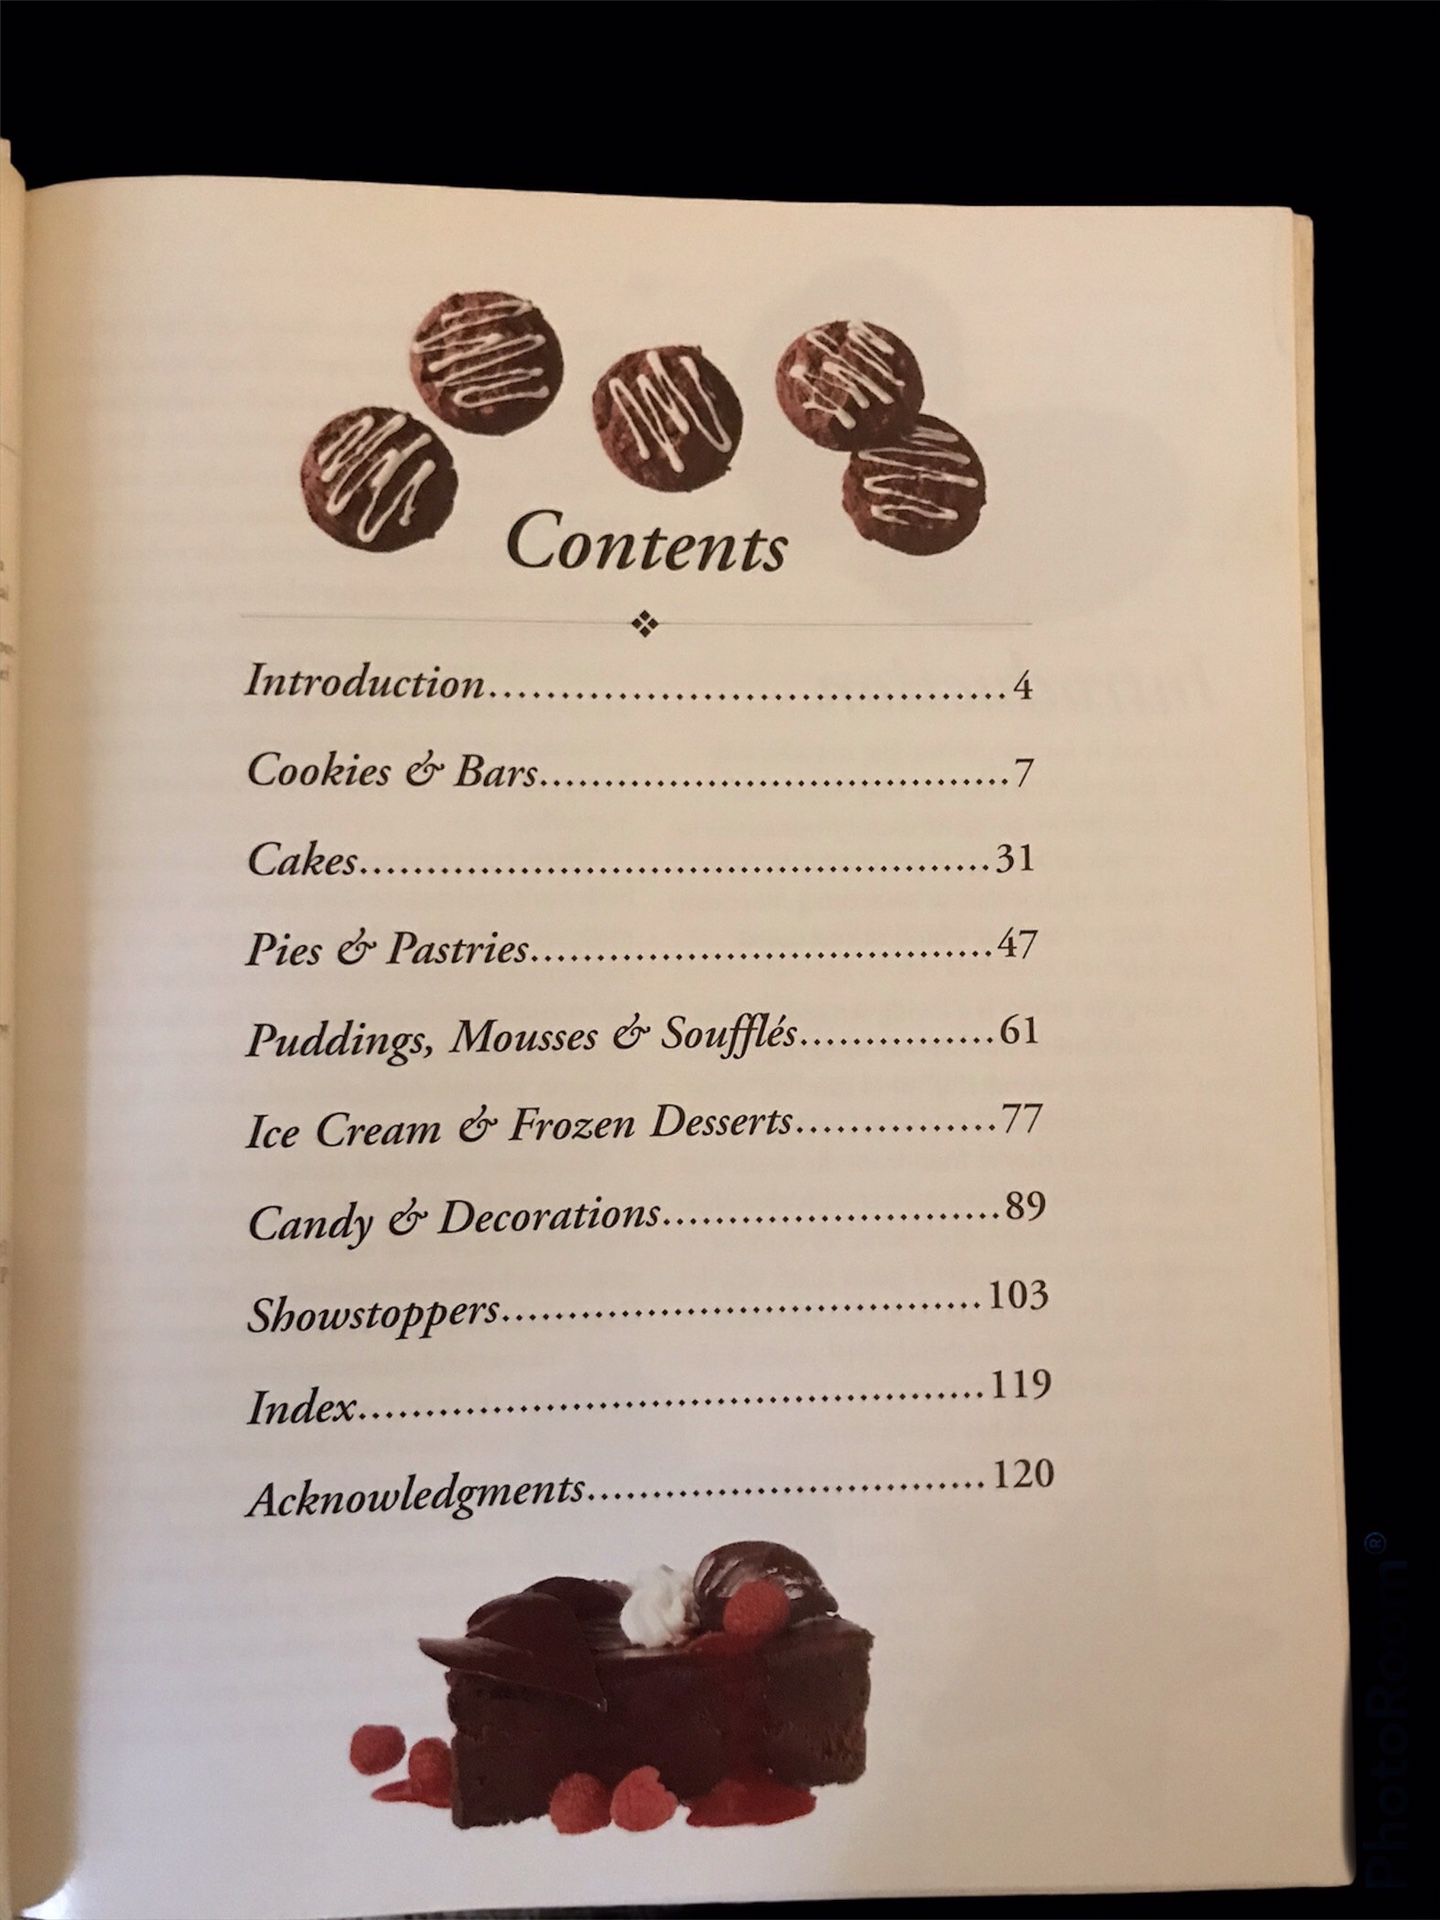 Mrs. Field’s I Love Chocolate Cookbook